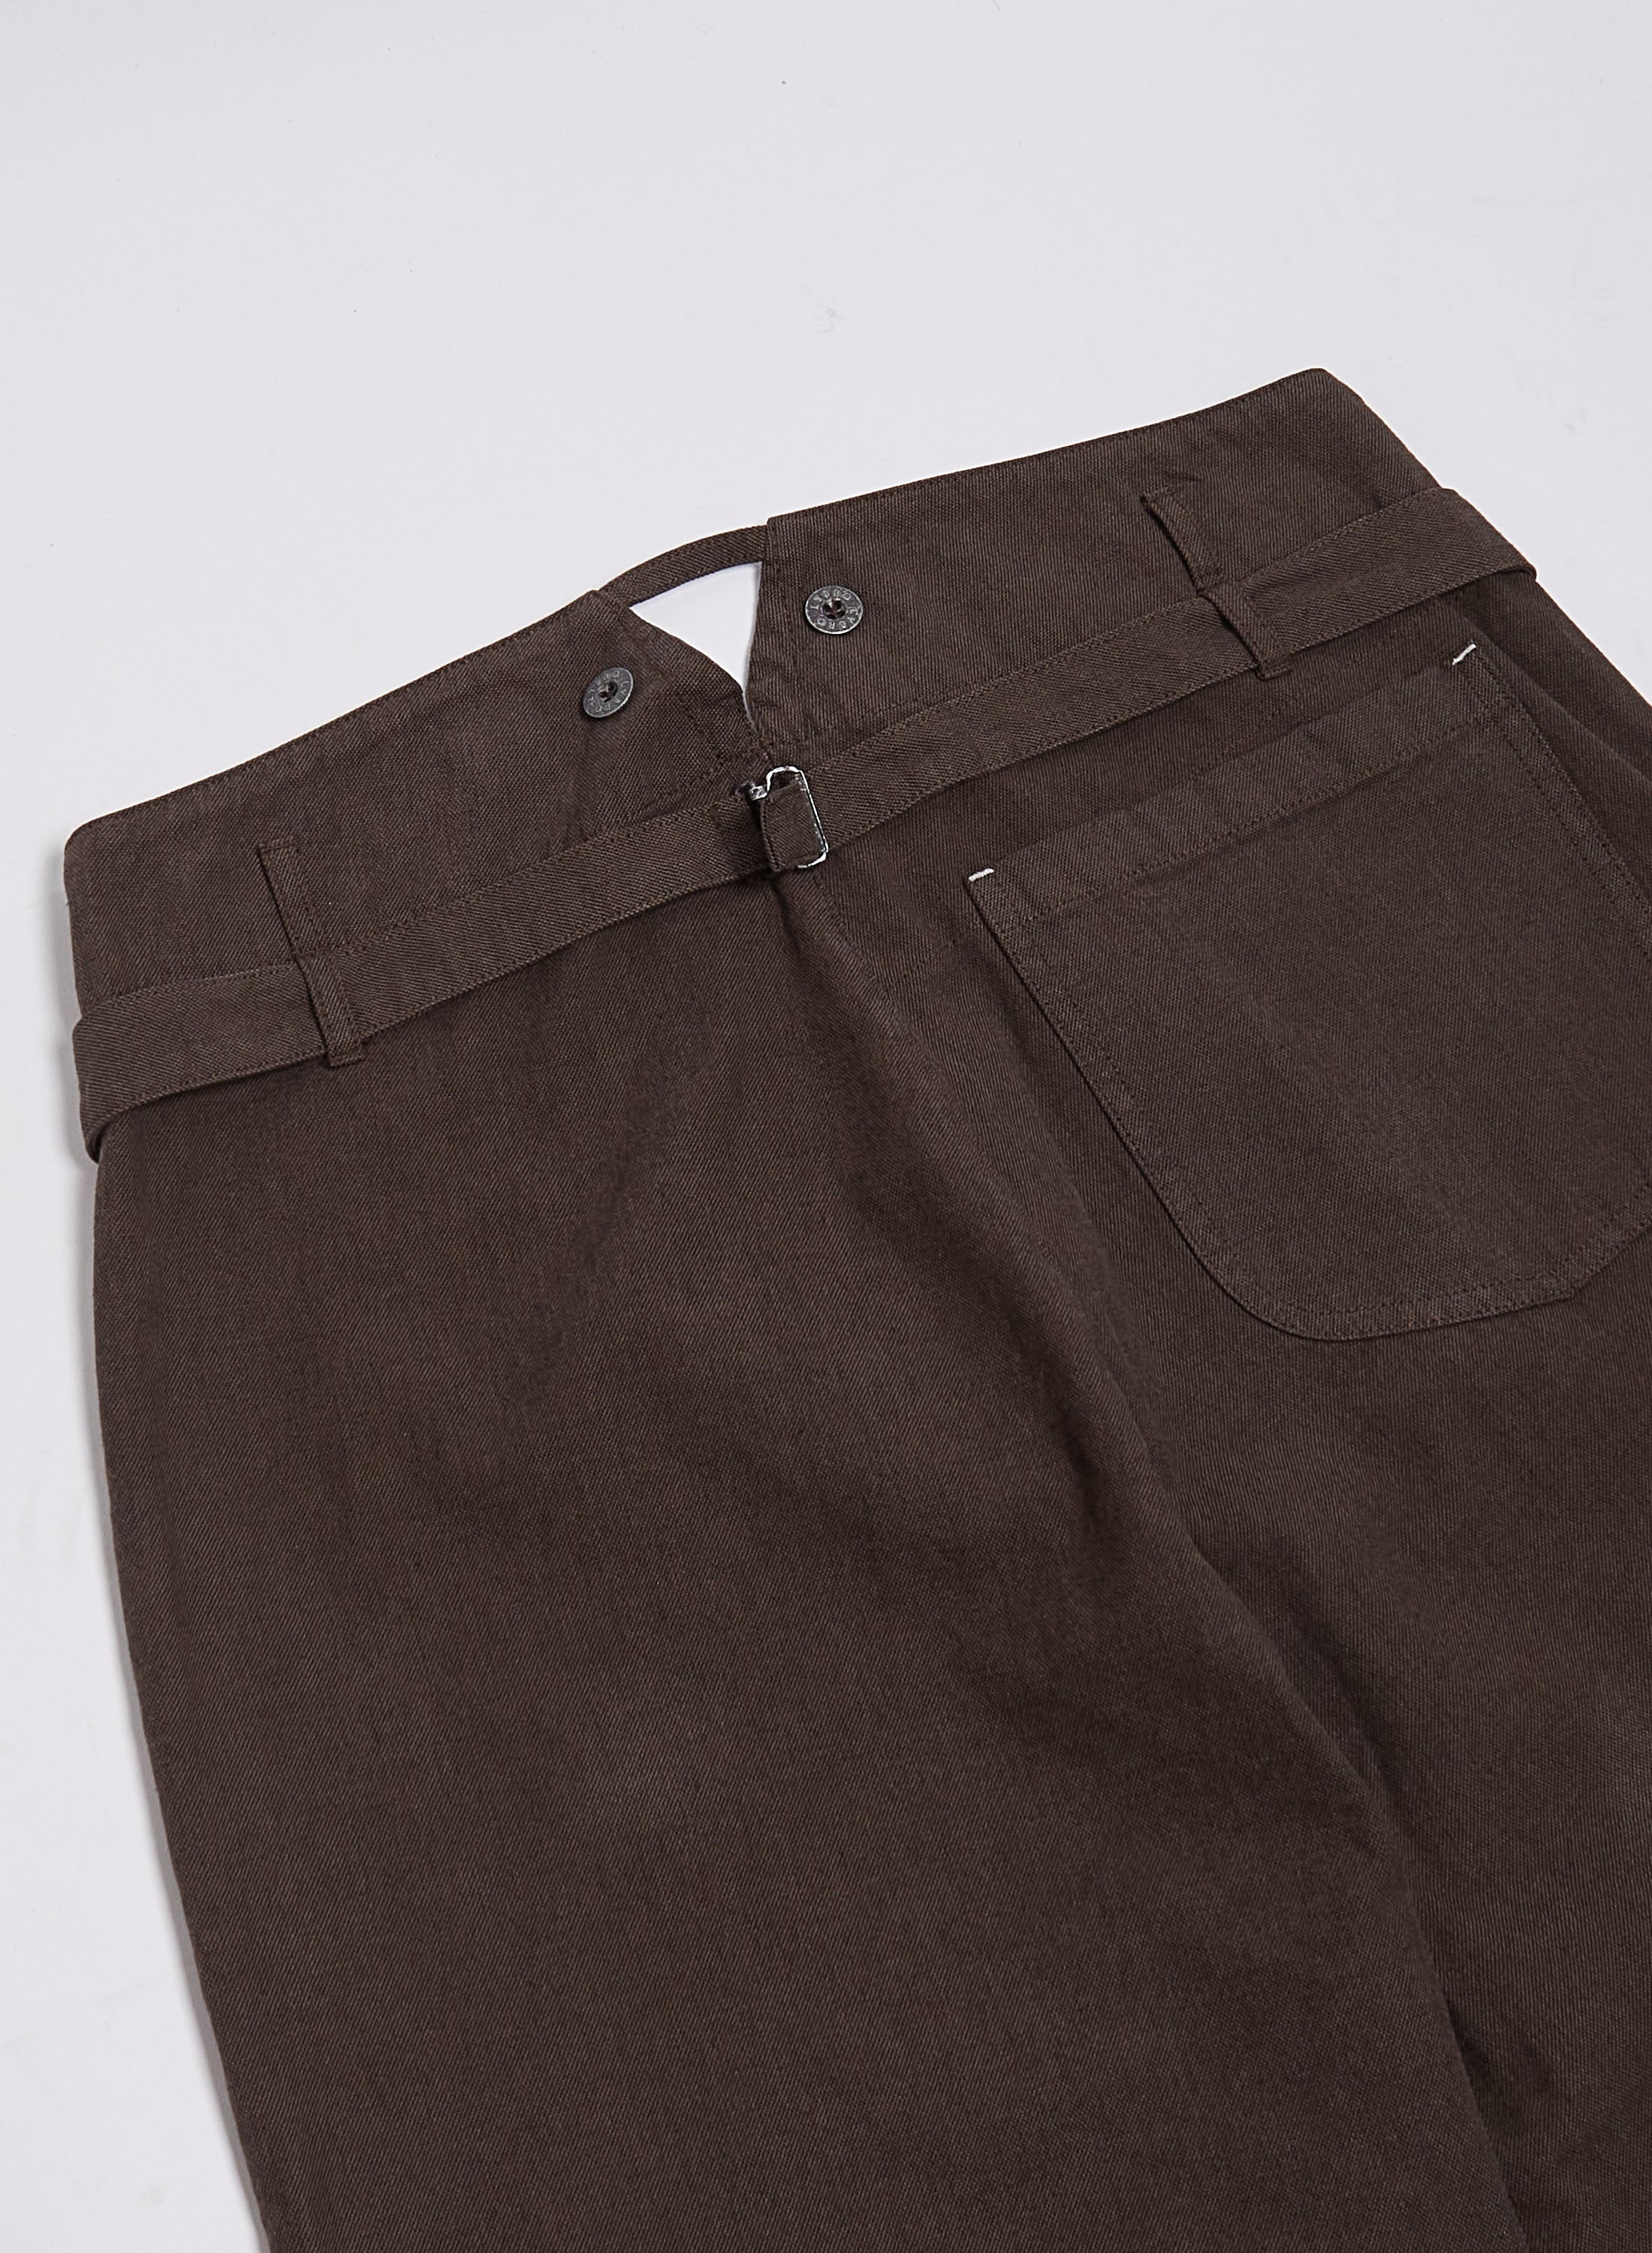 New Workwear Pant Broken Twill in Brown - 5